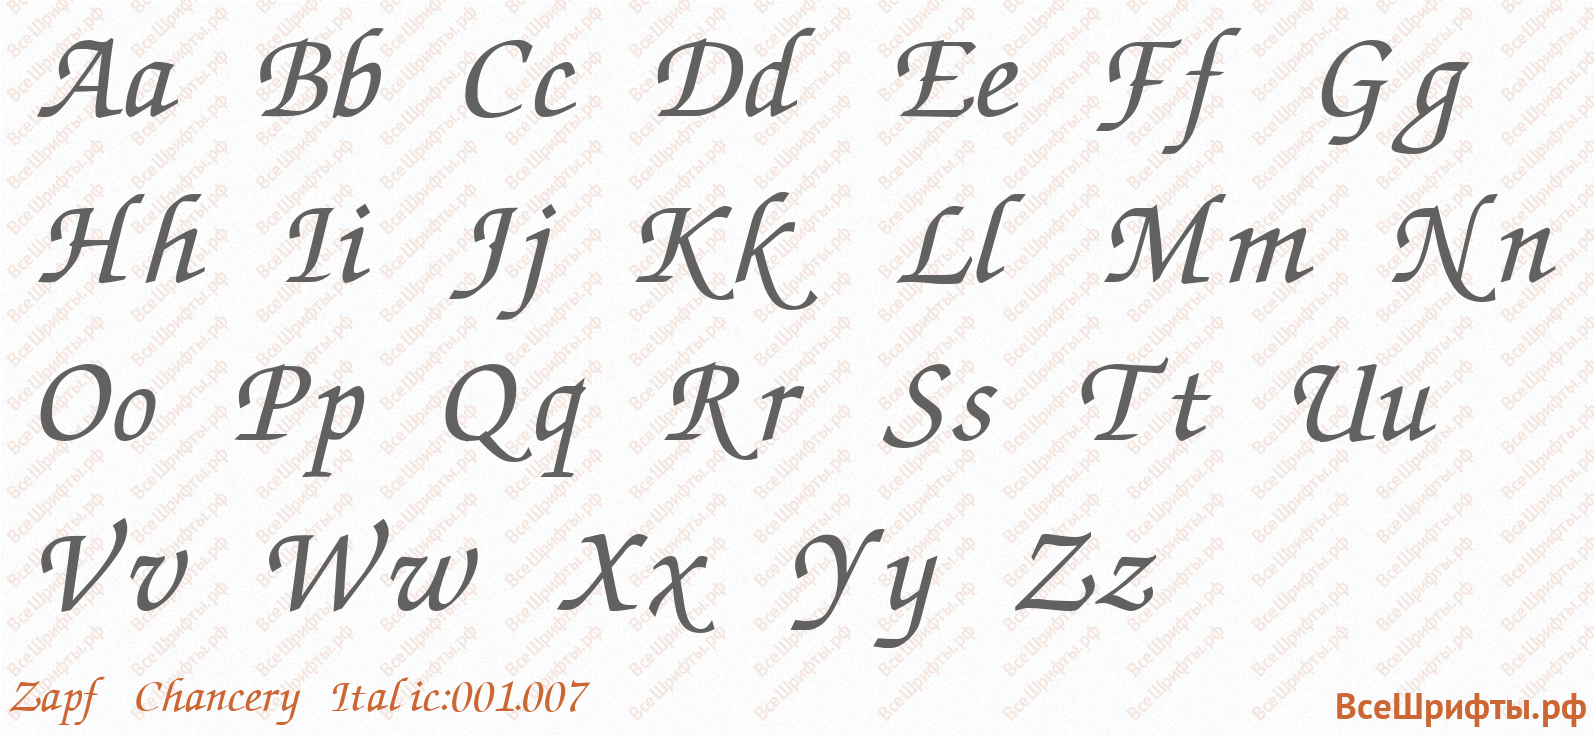 Шрифт Zapf Chancery Italic:001.007 с латинскими буквами